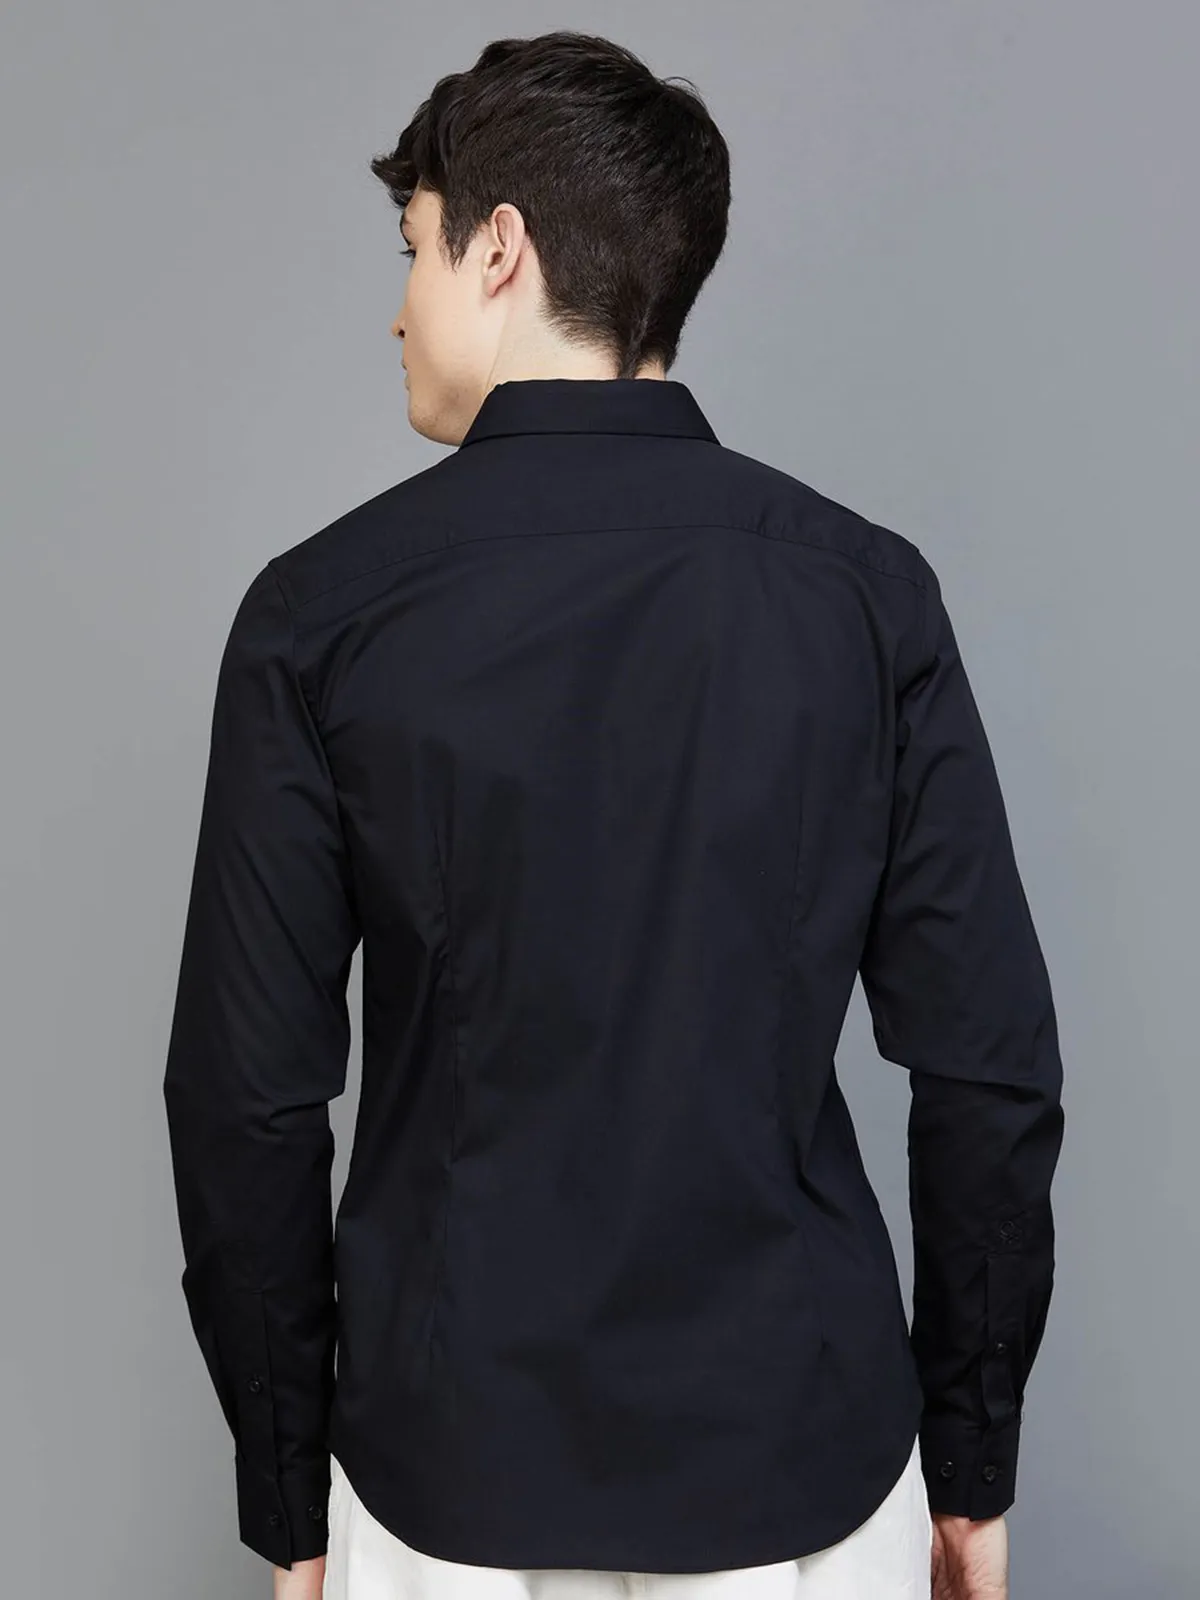 UCB plain cotton black casual shirt